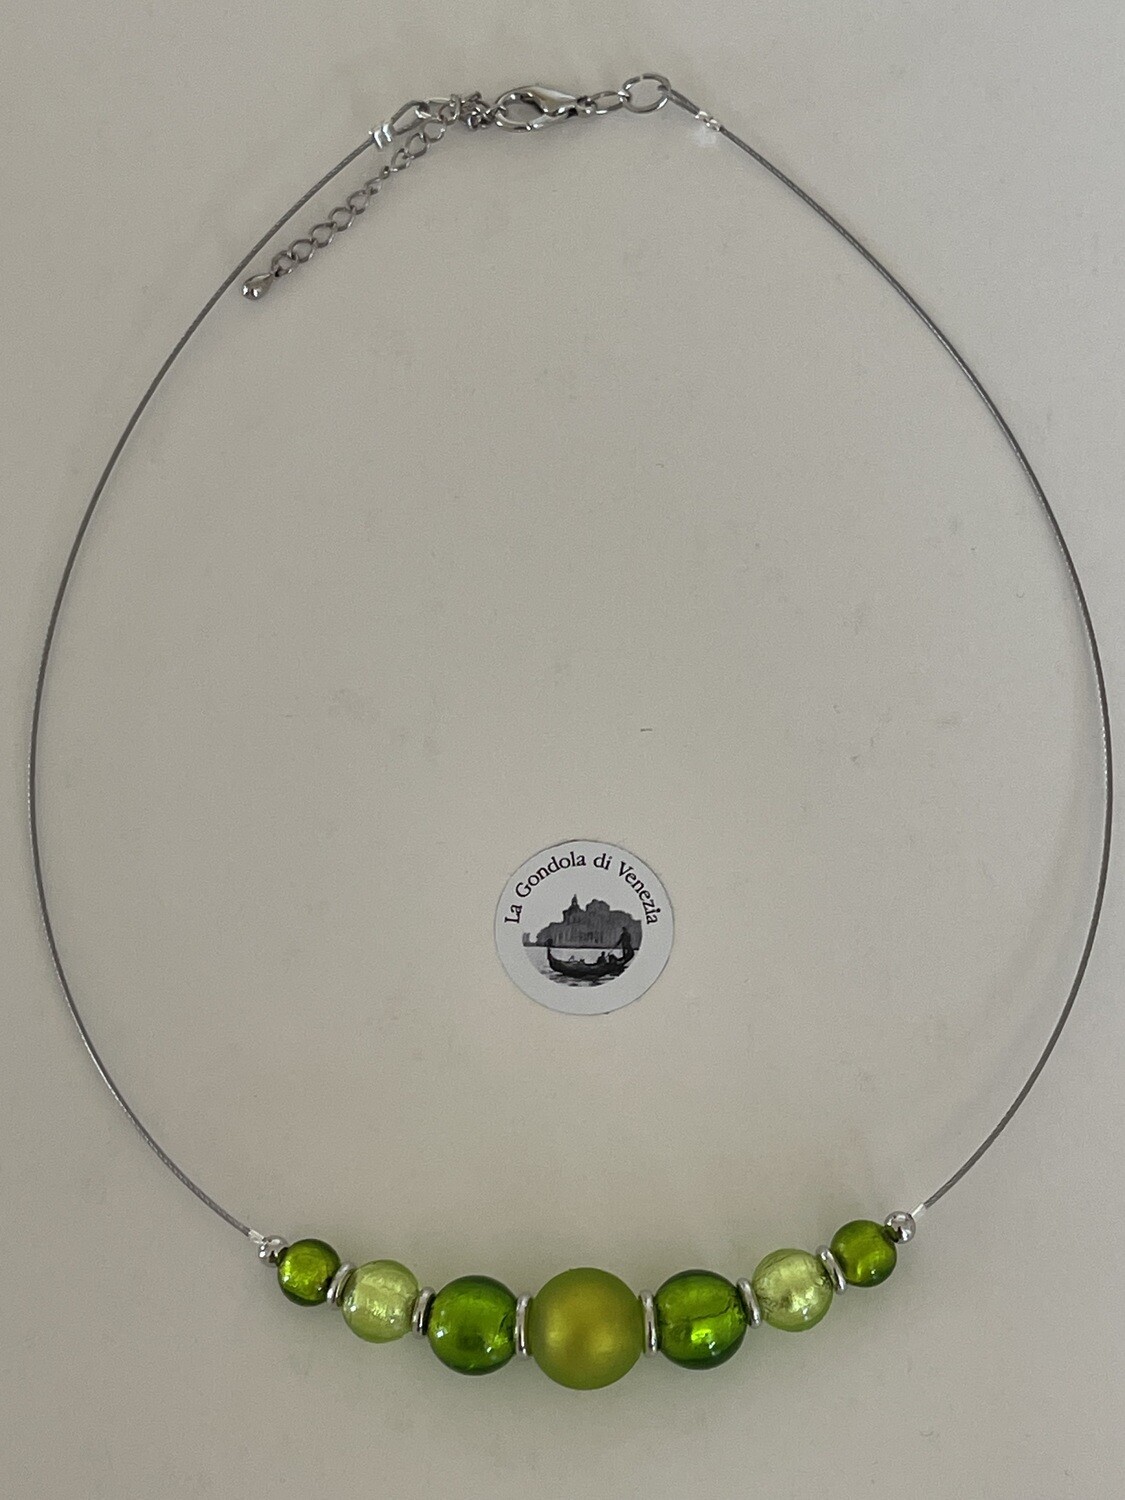 Necklace GdV 7 balls 14. 12. 10/8mm light green